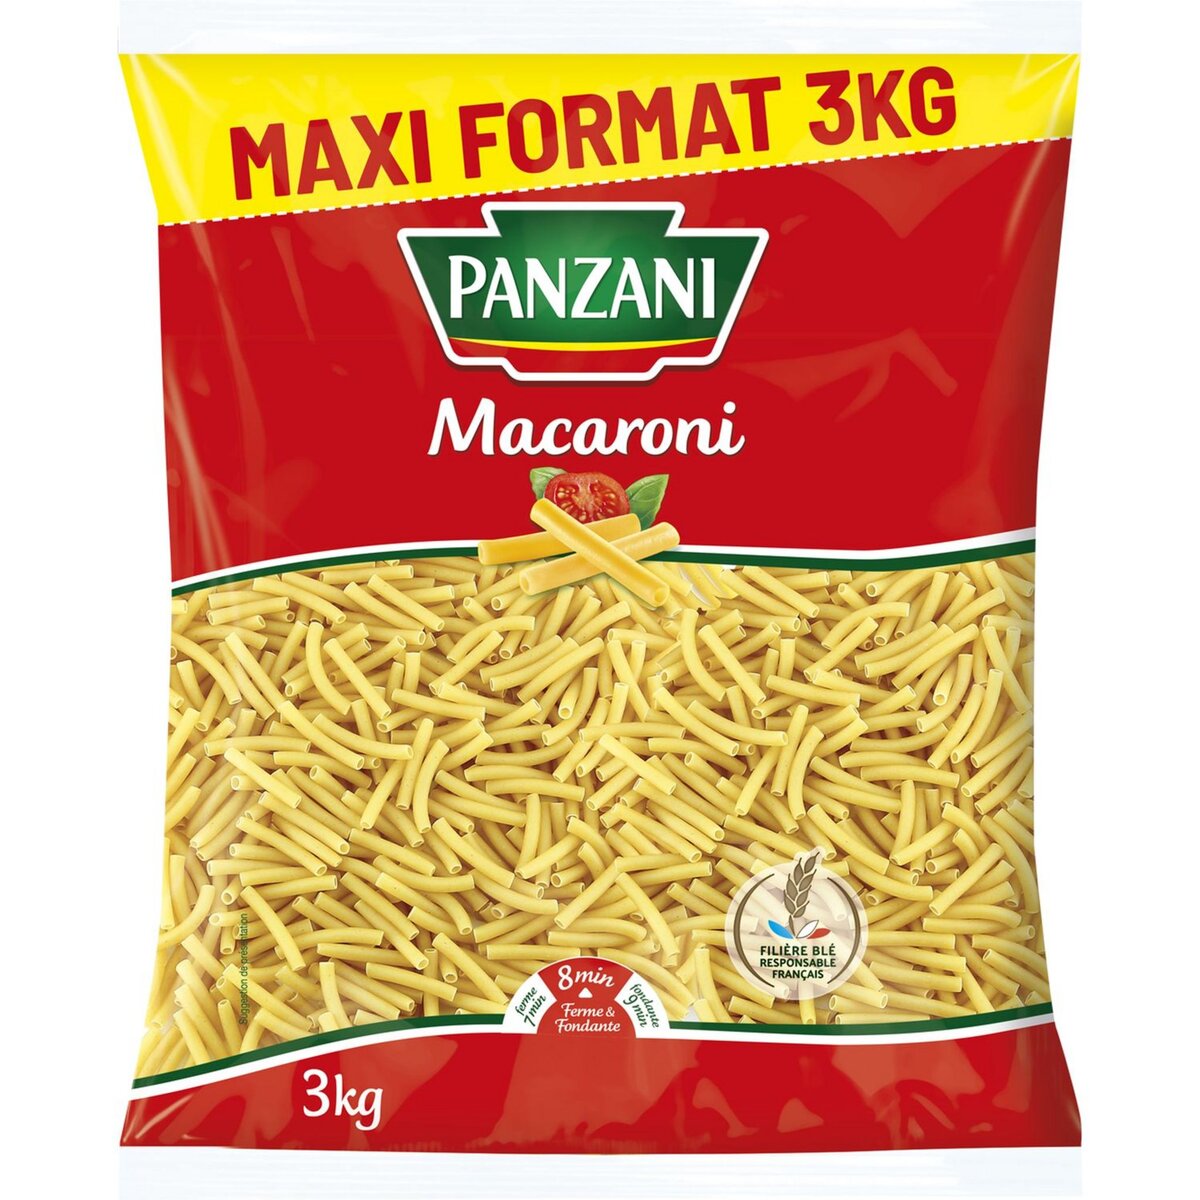 PANZANI Macaroni maxi format 3kg